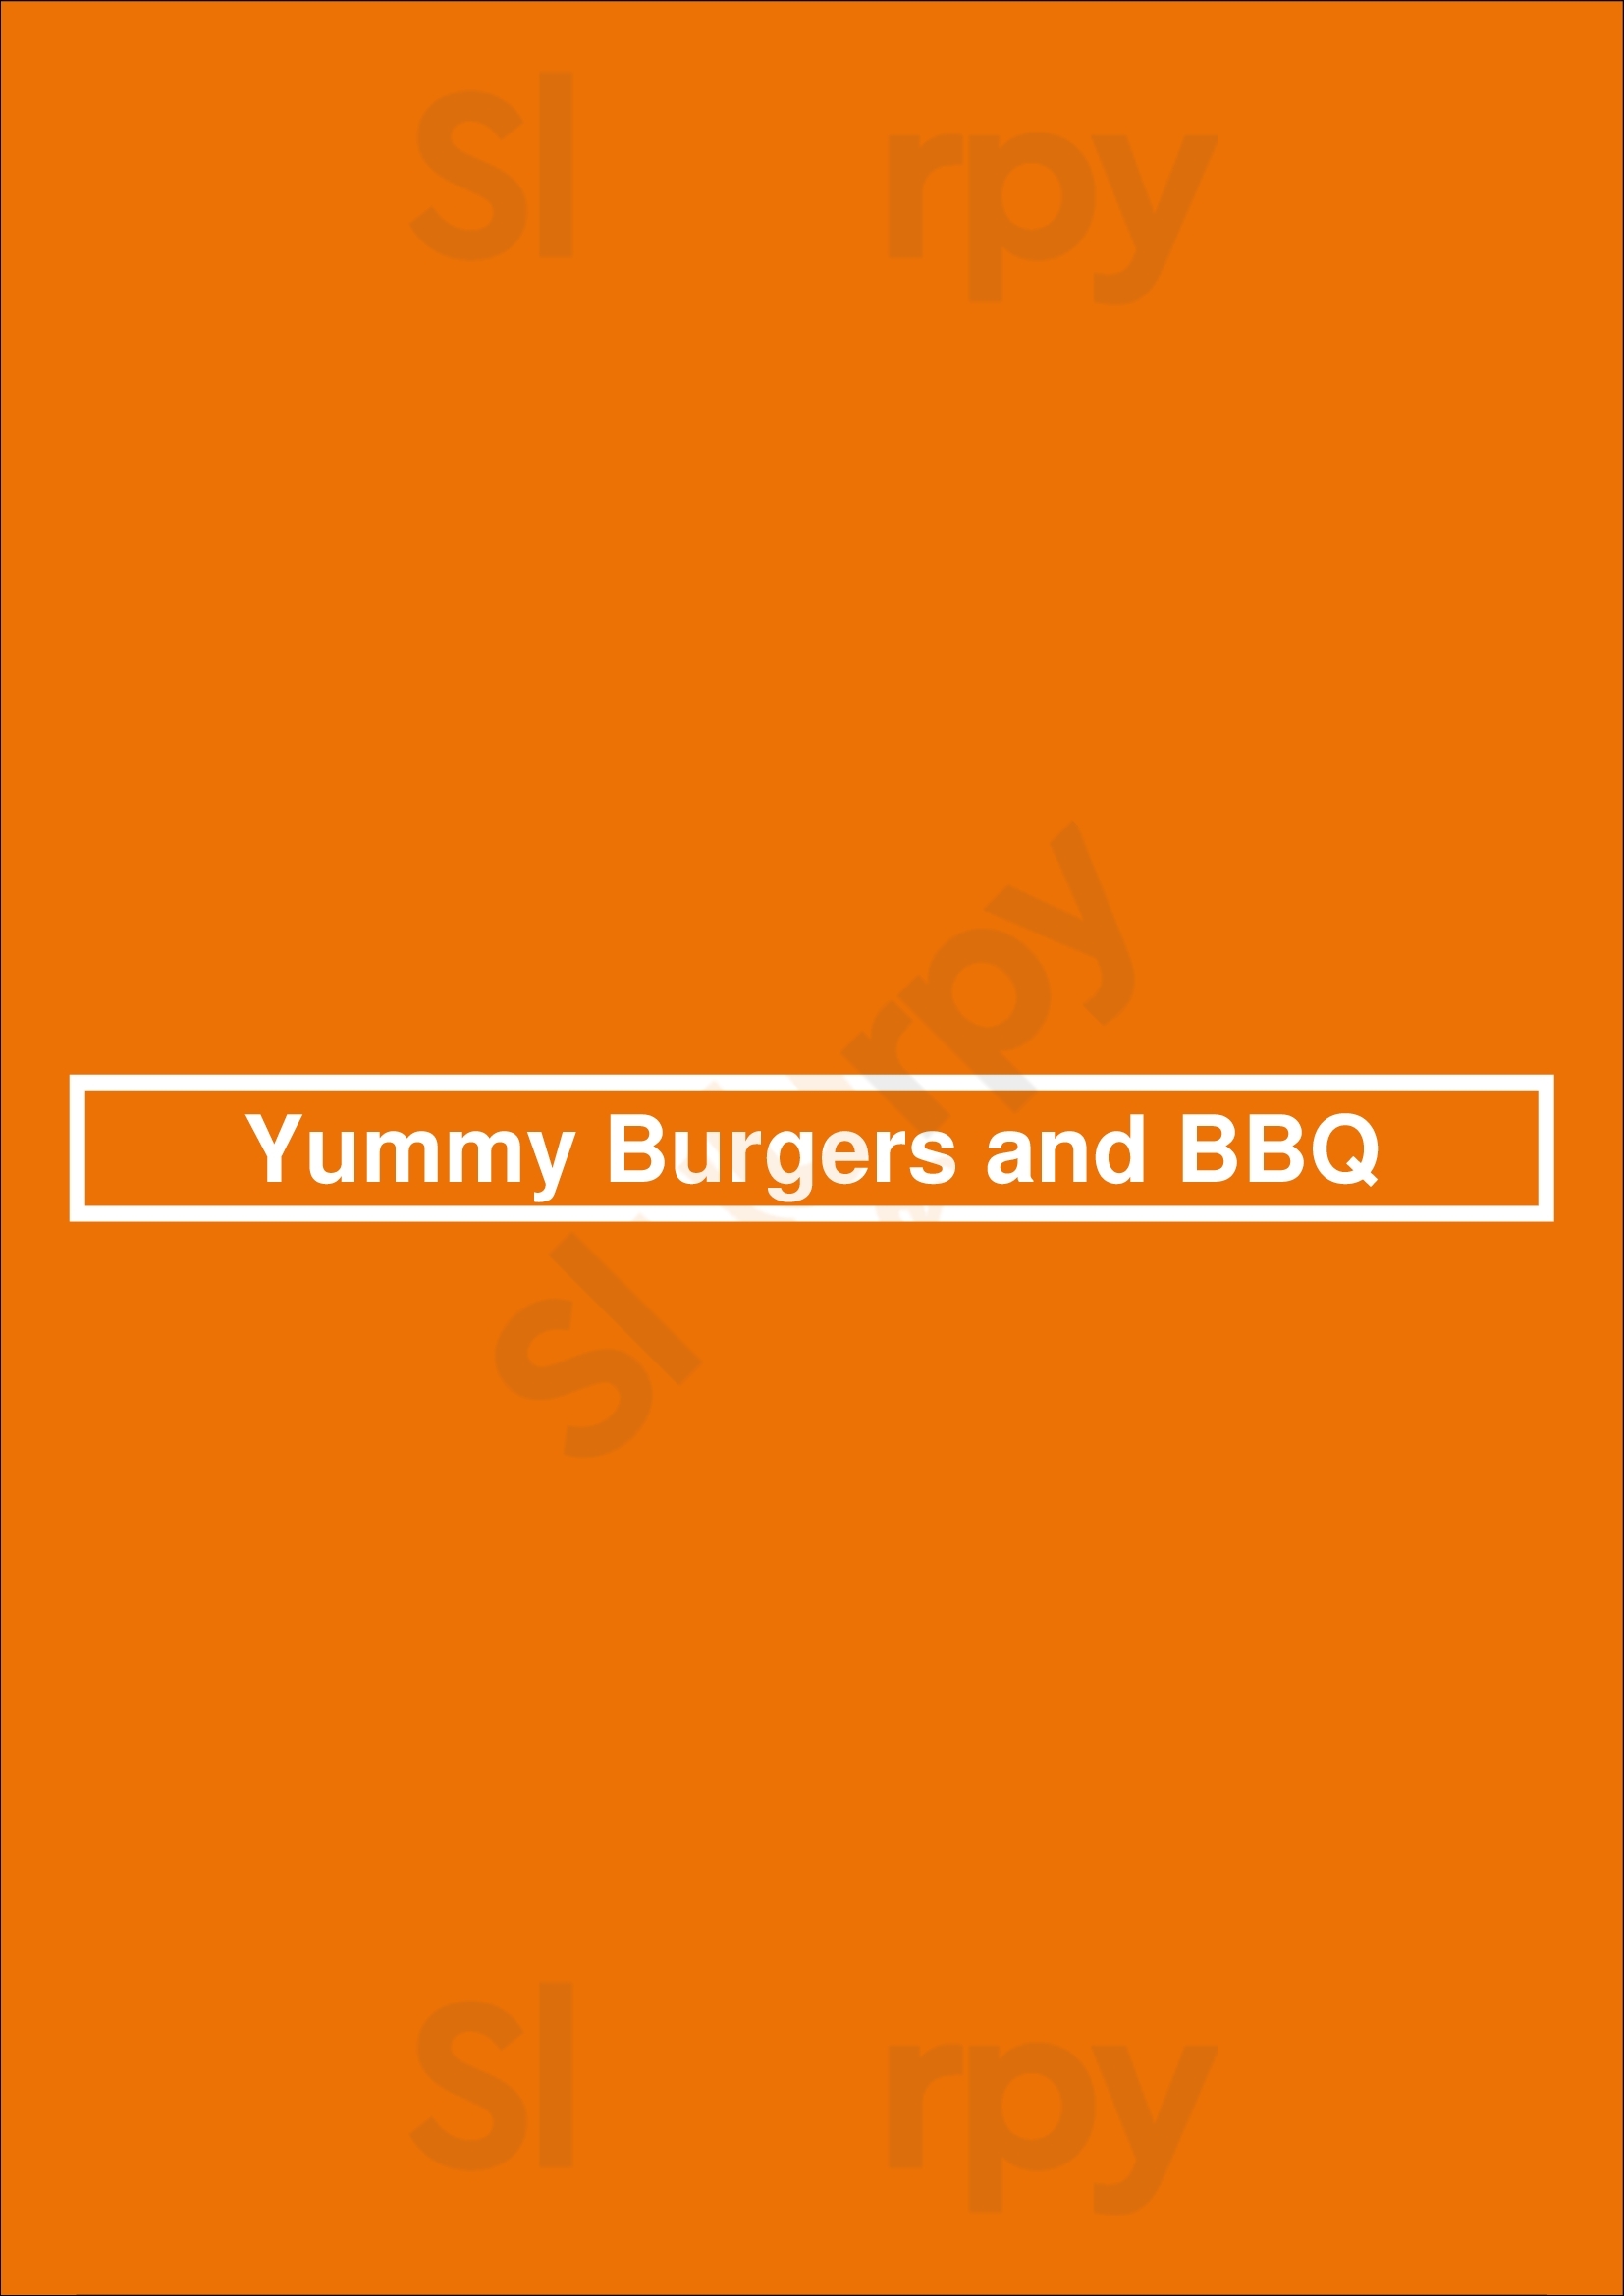 Yummy Burgers And Bbq Plano Menu - 1